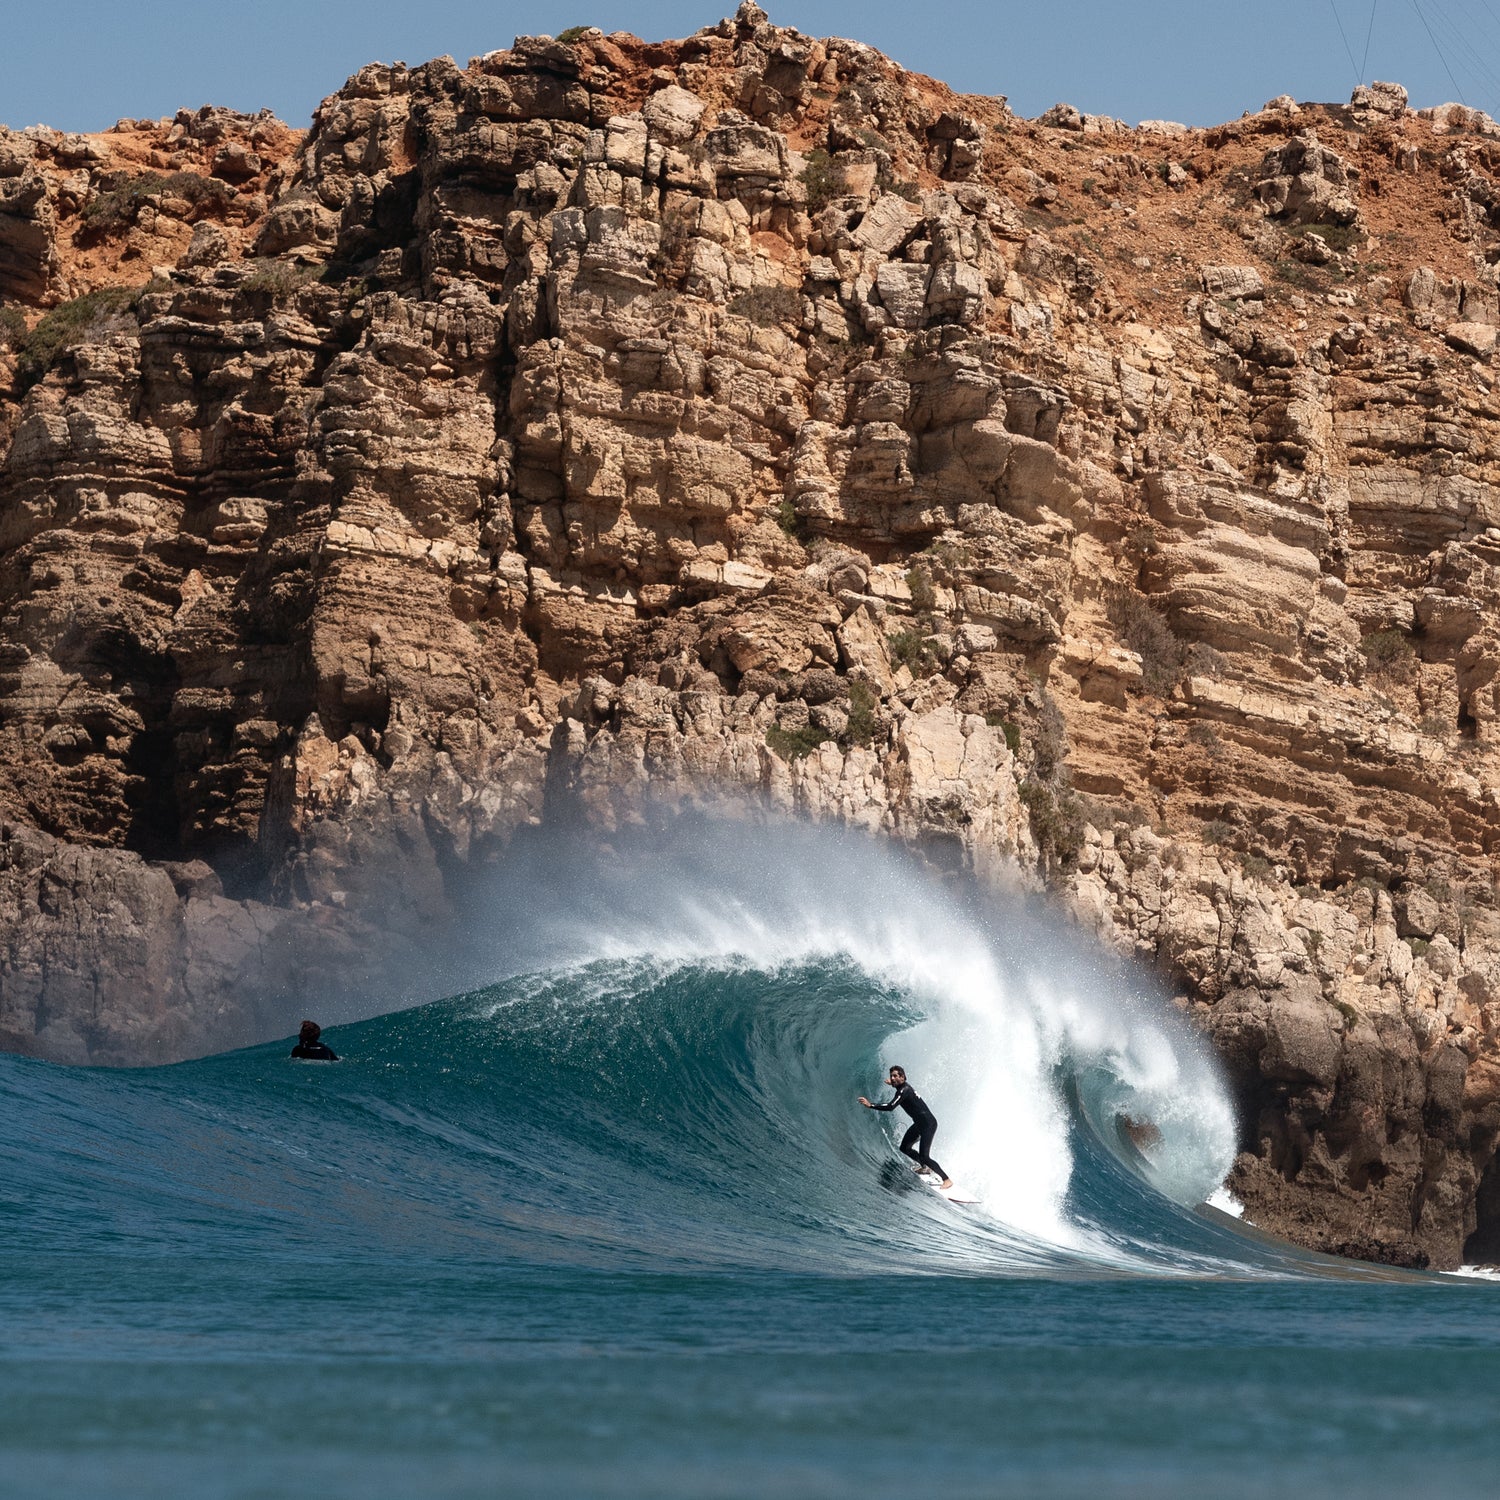 Us the Movement surfer Gony Zubizarreta surfing in Portugal